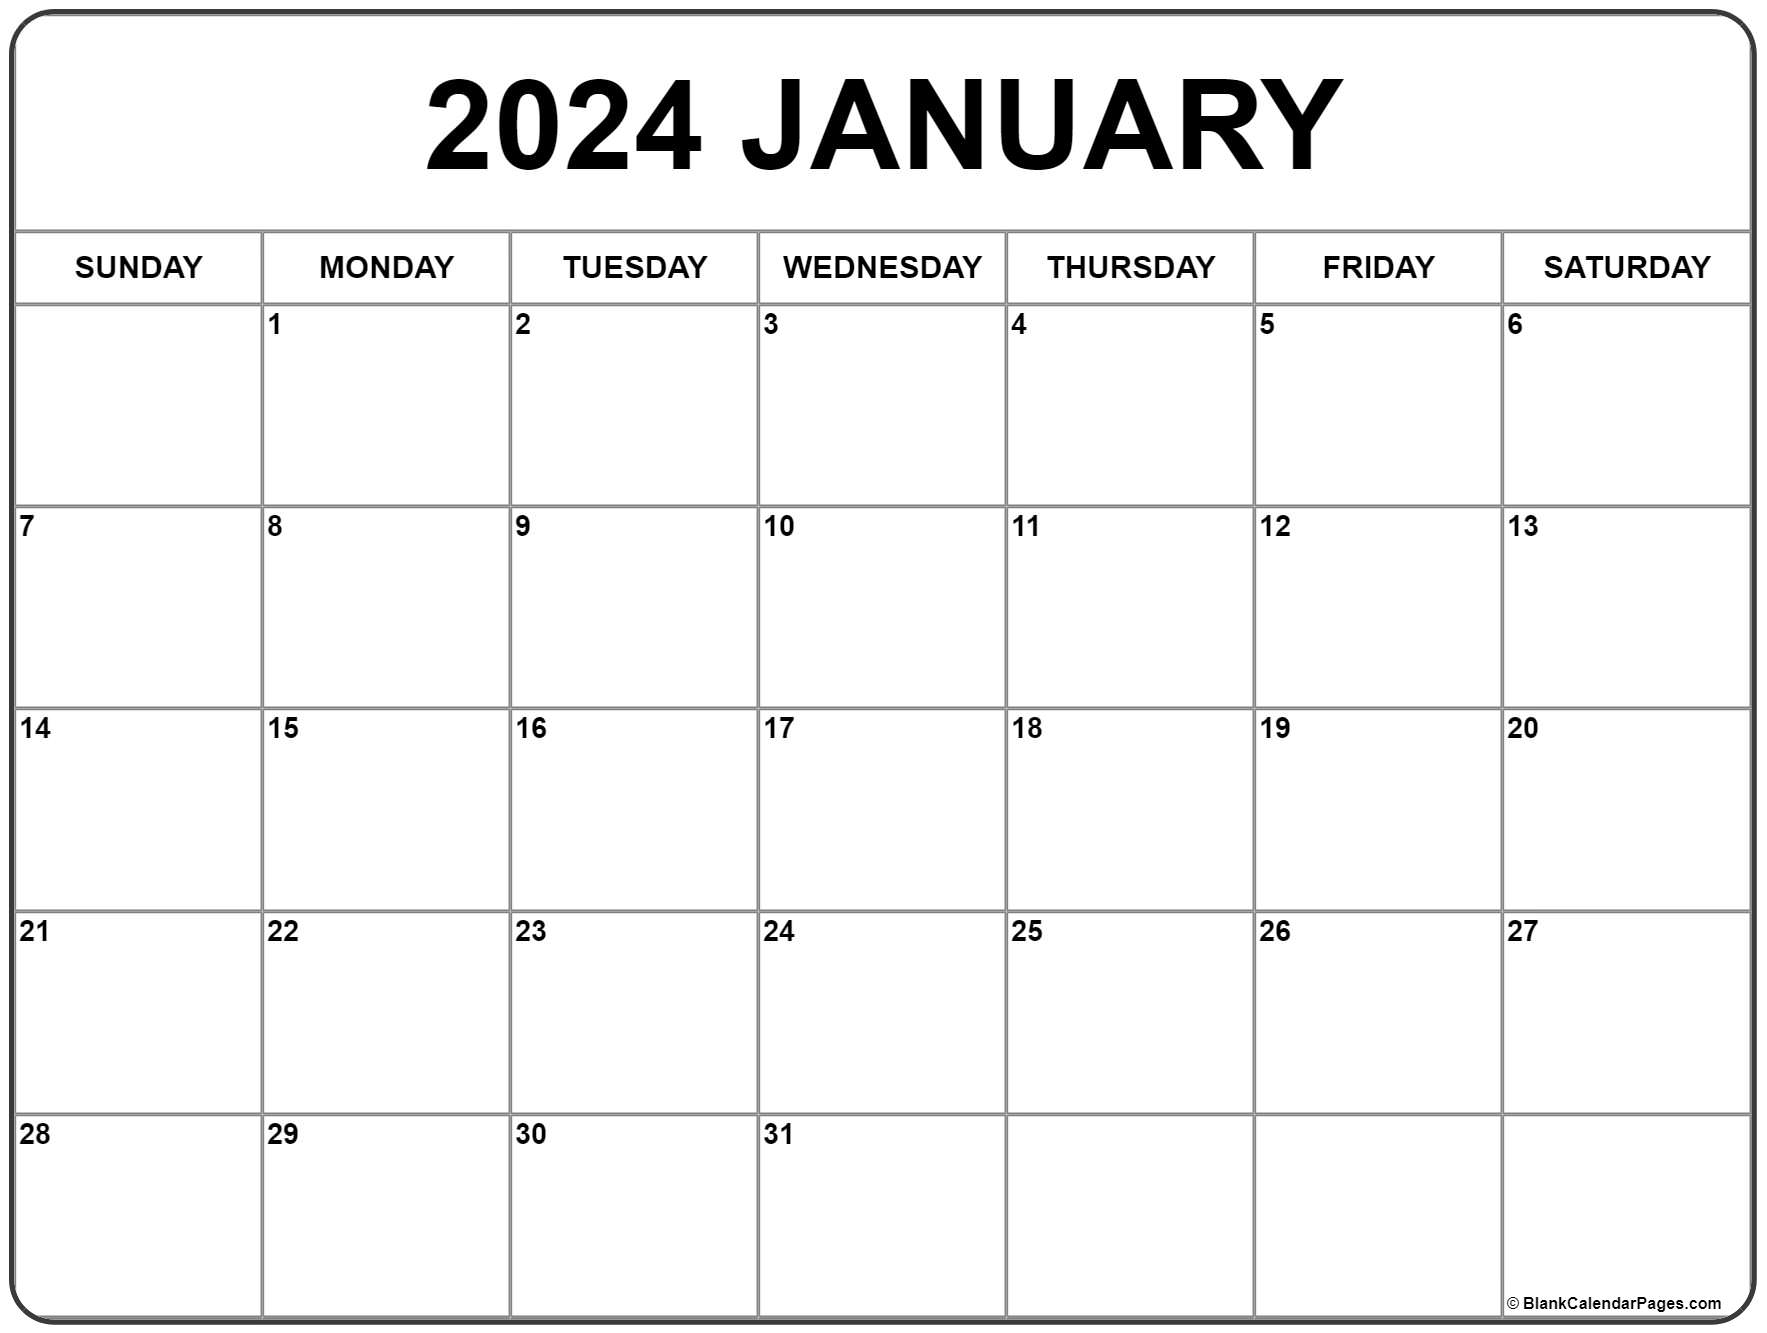 Monthly 2024 Blank Calendar Calendar Quickly Vrogue